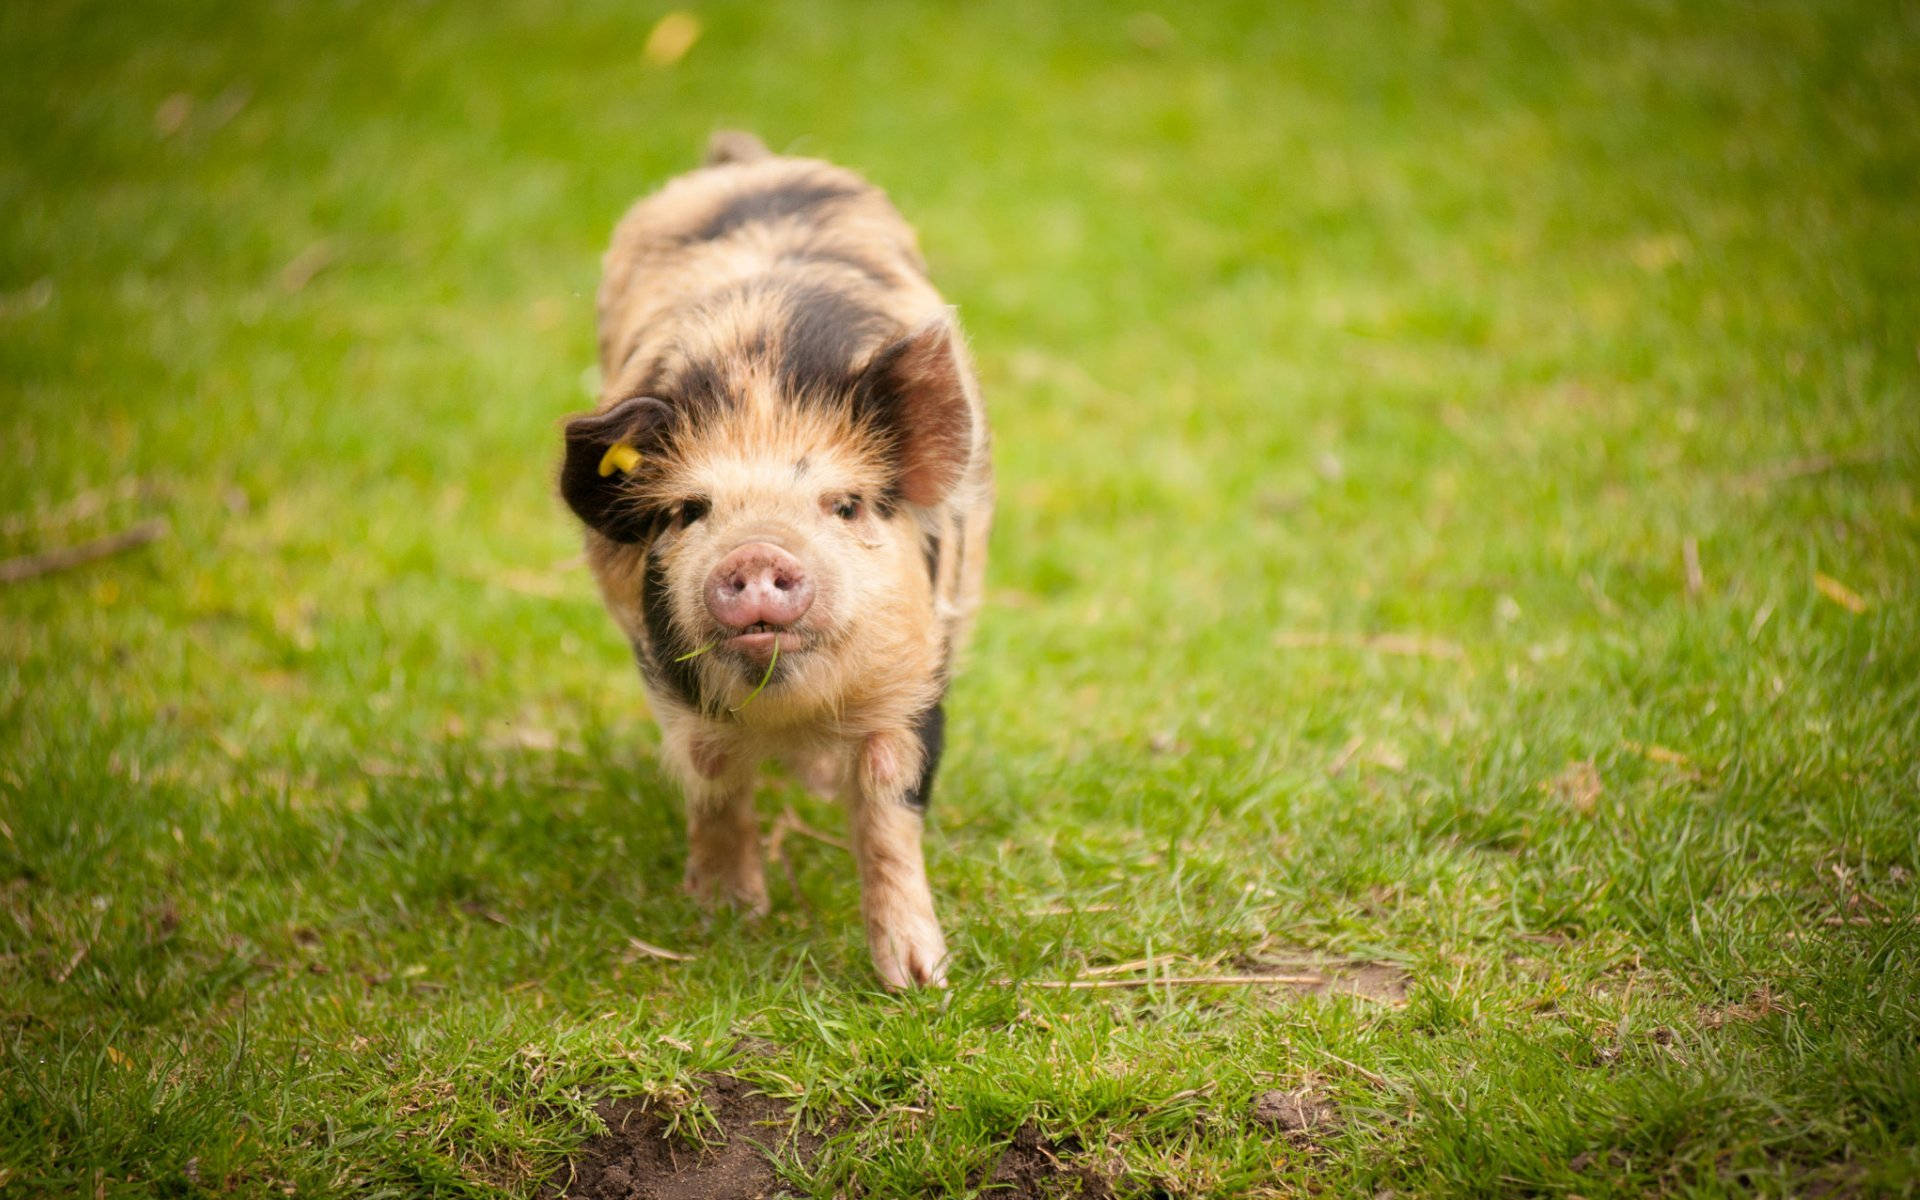 Pig On Grass Field Background